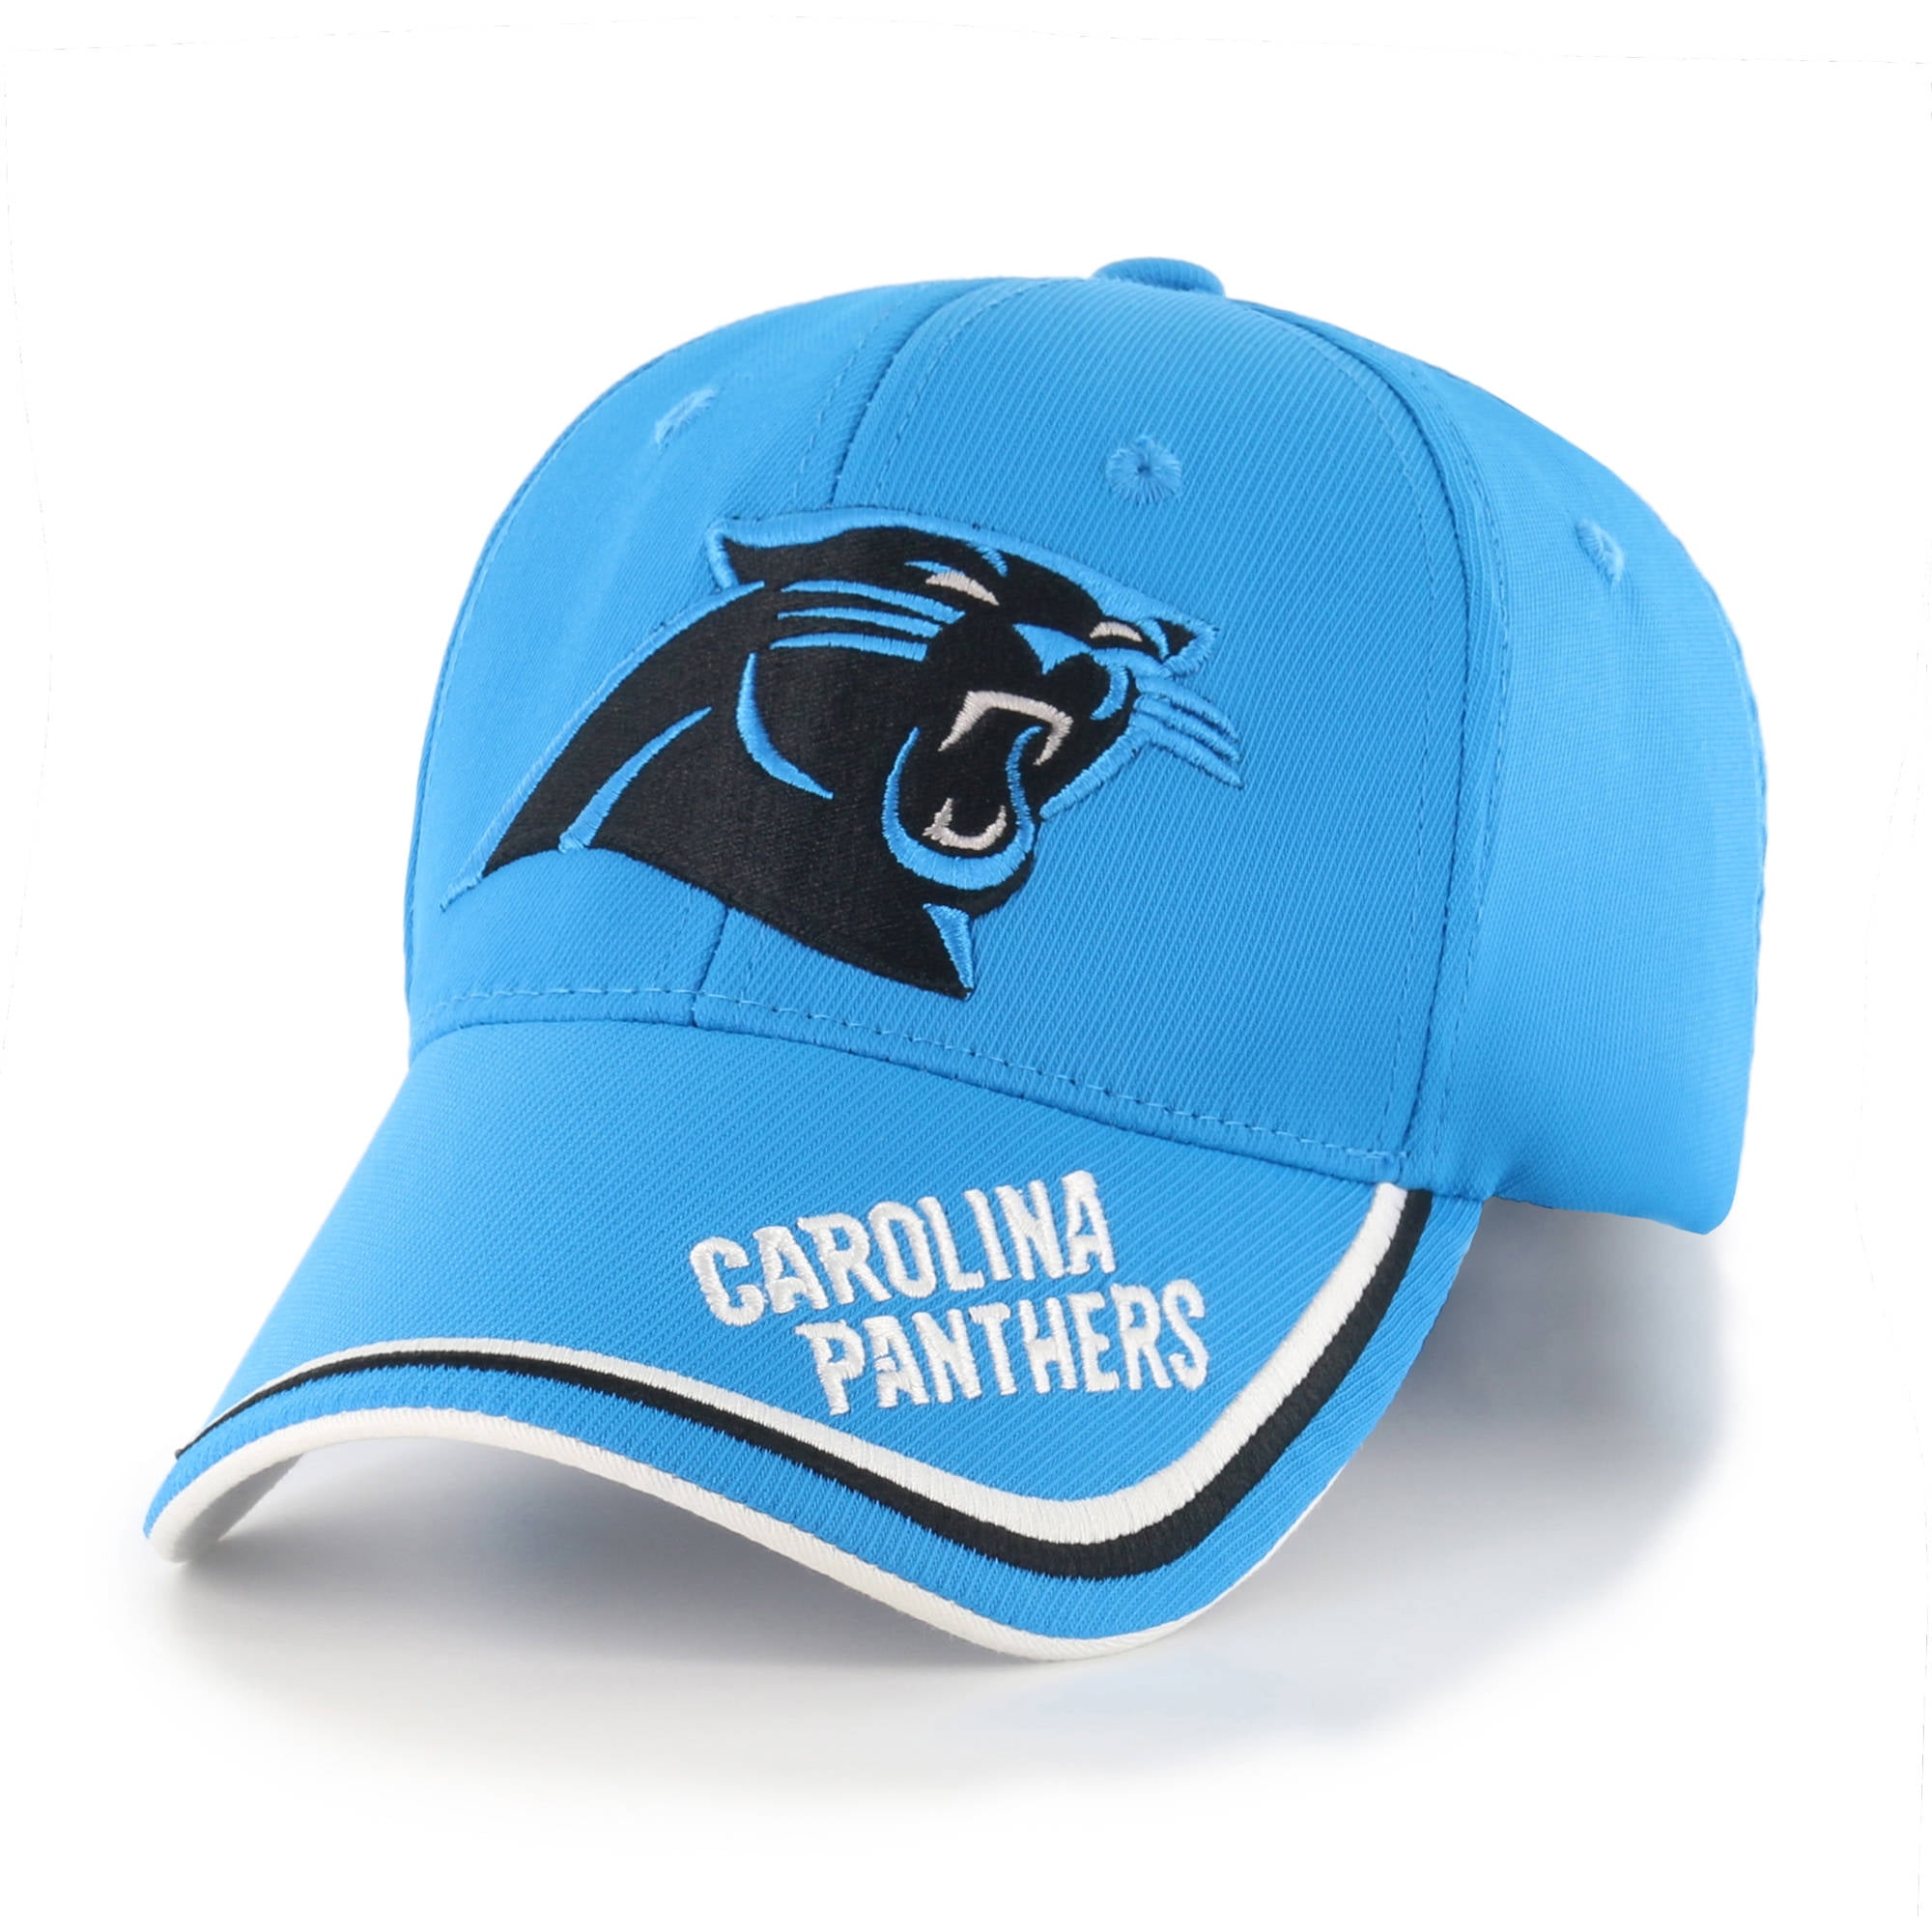 Buy NFL Carolina Panthers Mass Forest Cap - Fan Favorite at Walmart.com. 